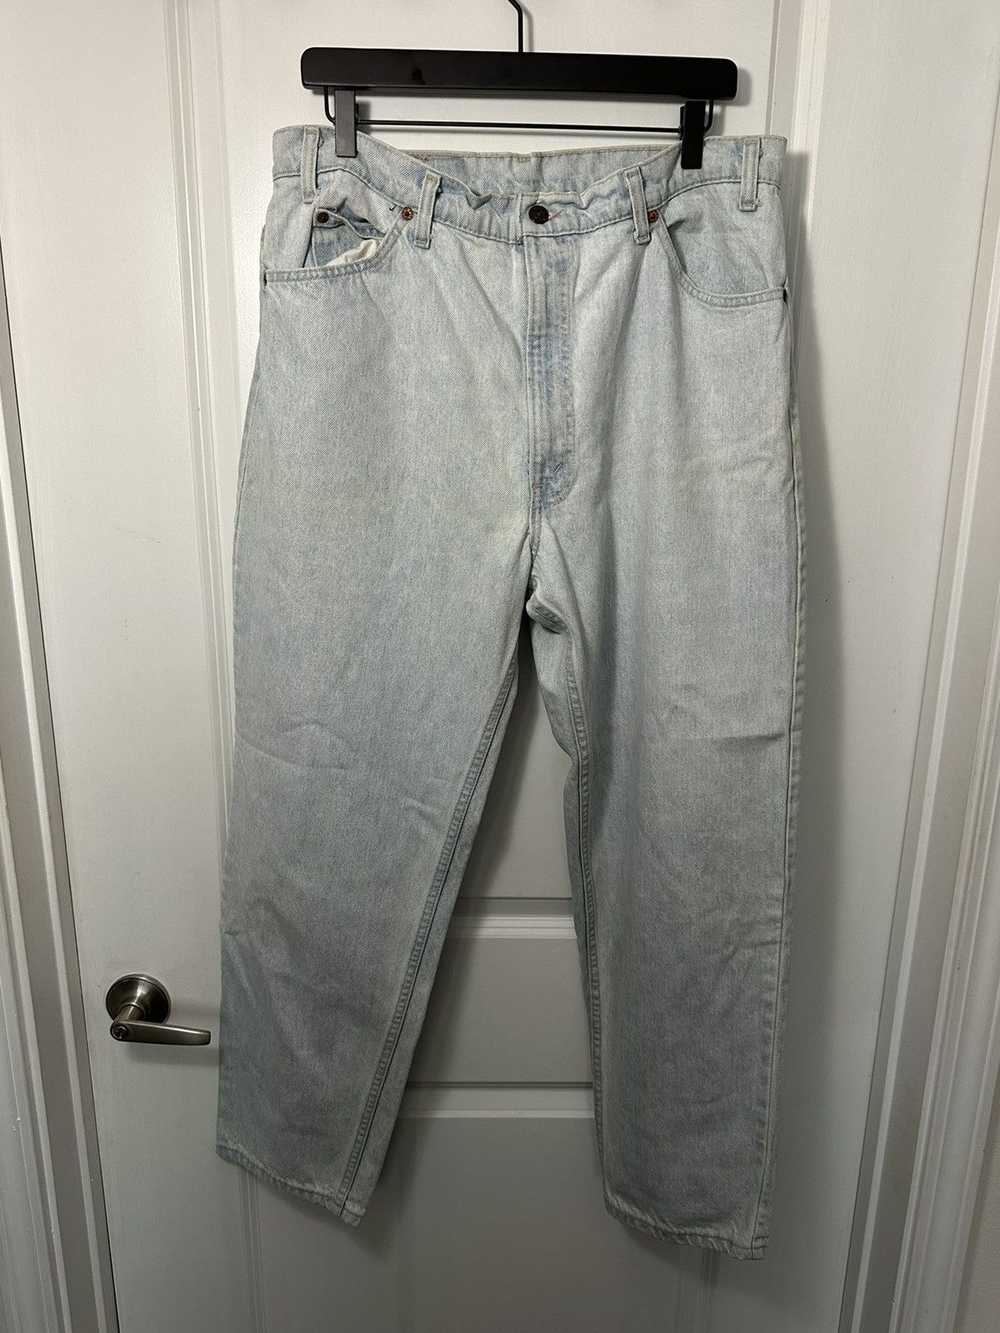 Levi's Orange tab early 90s jeans - image 2